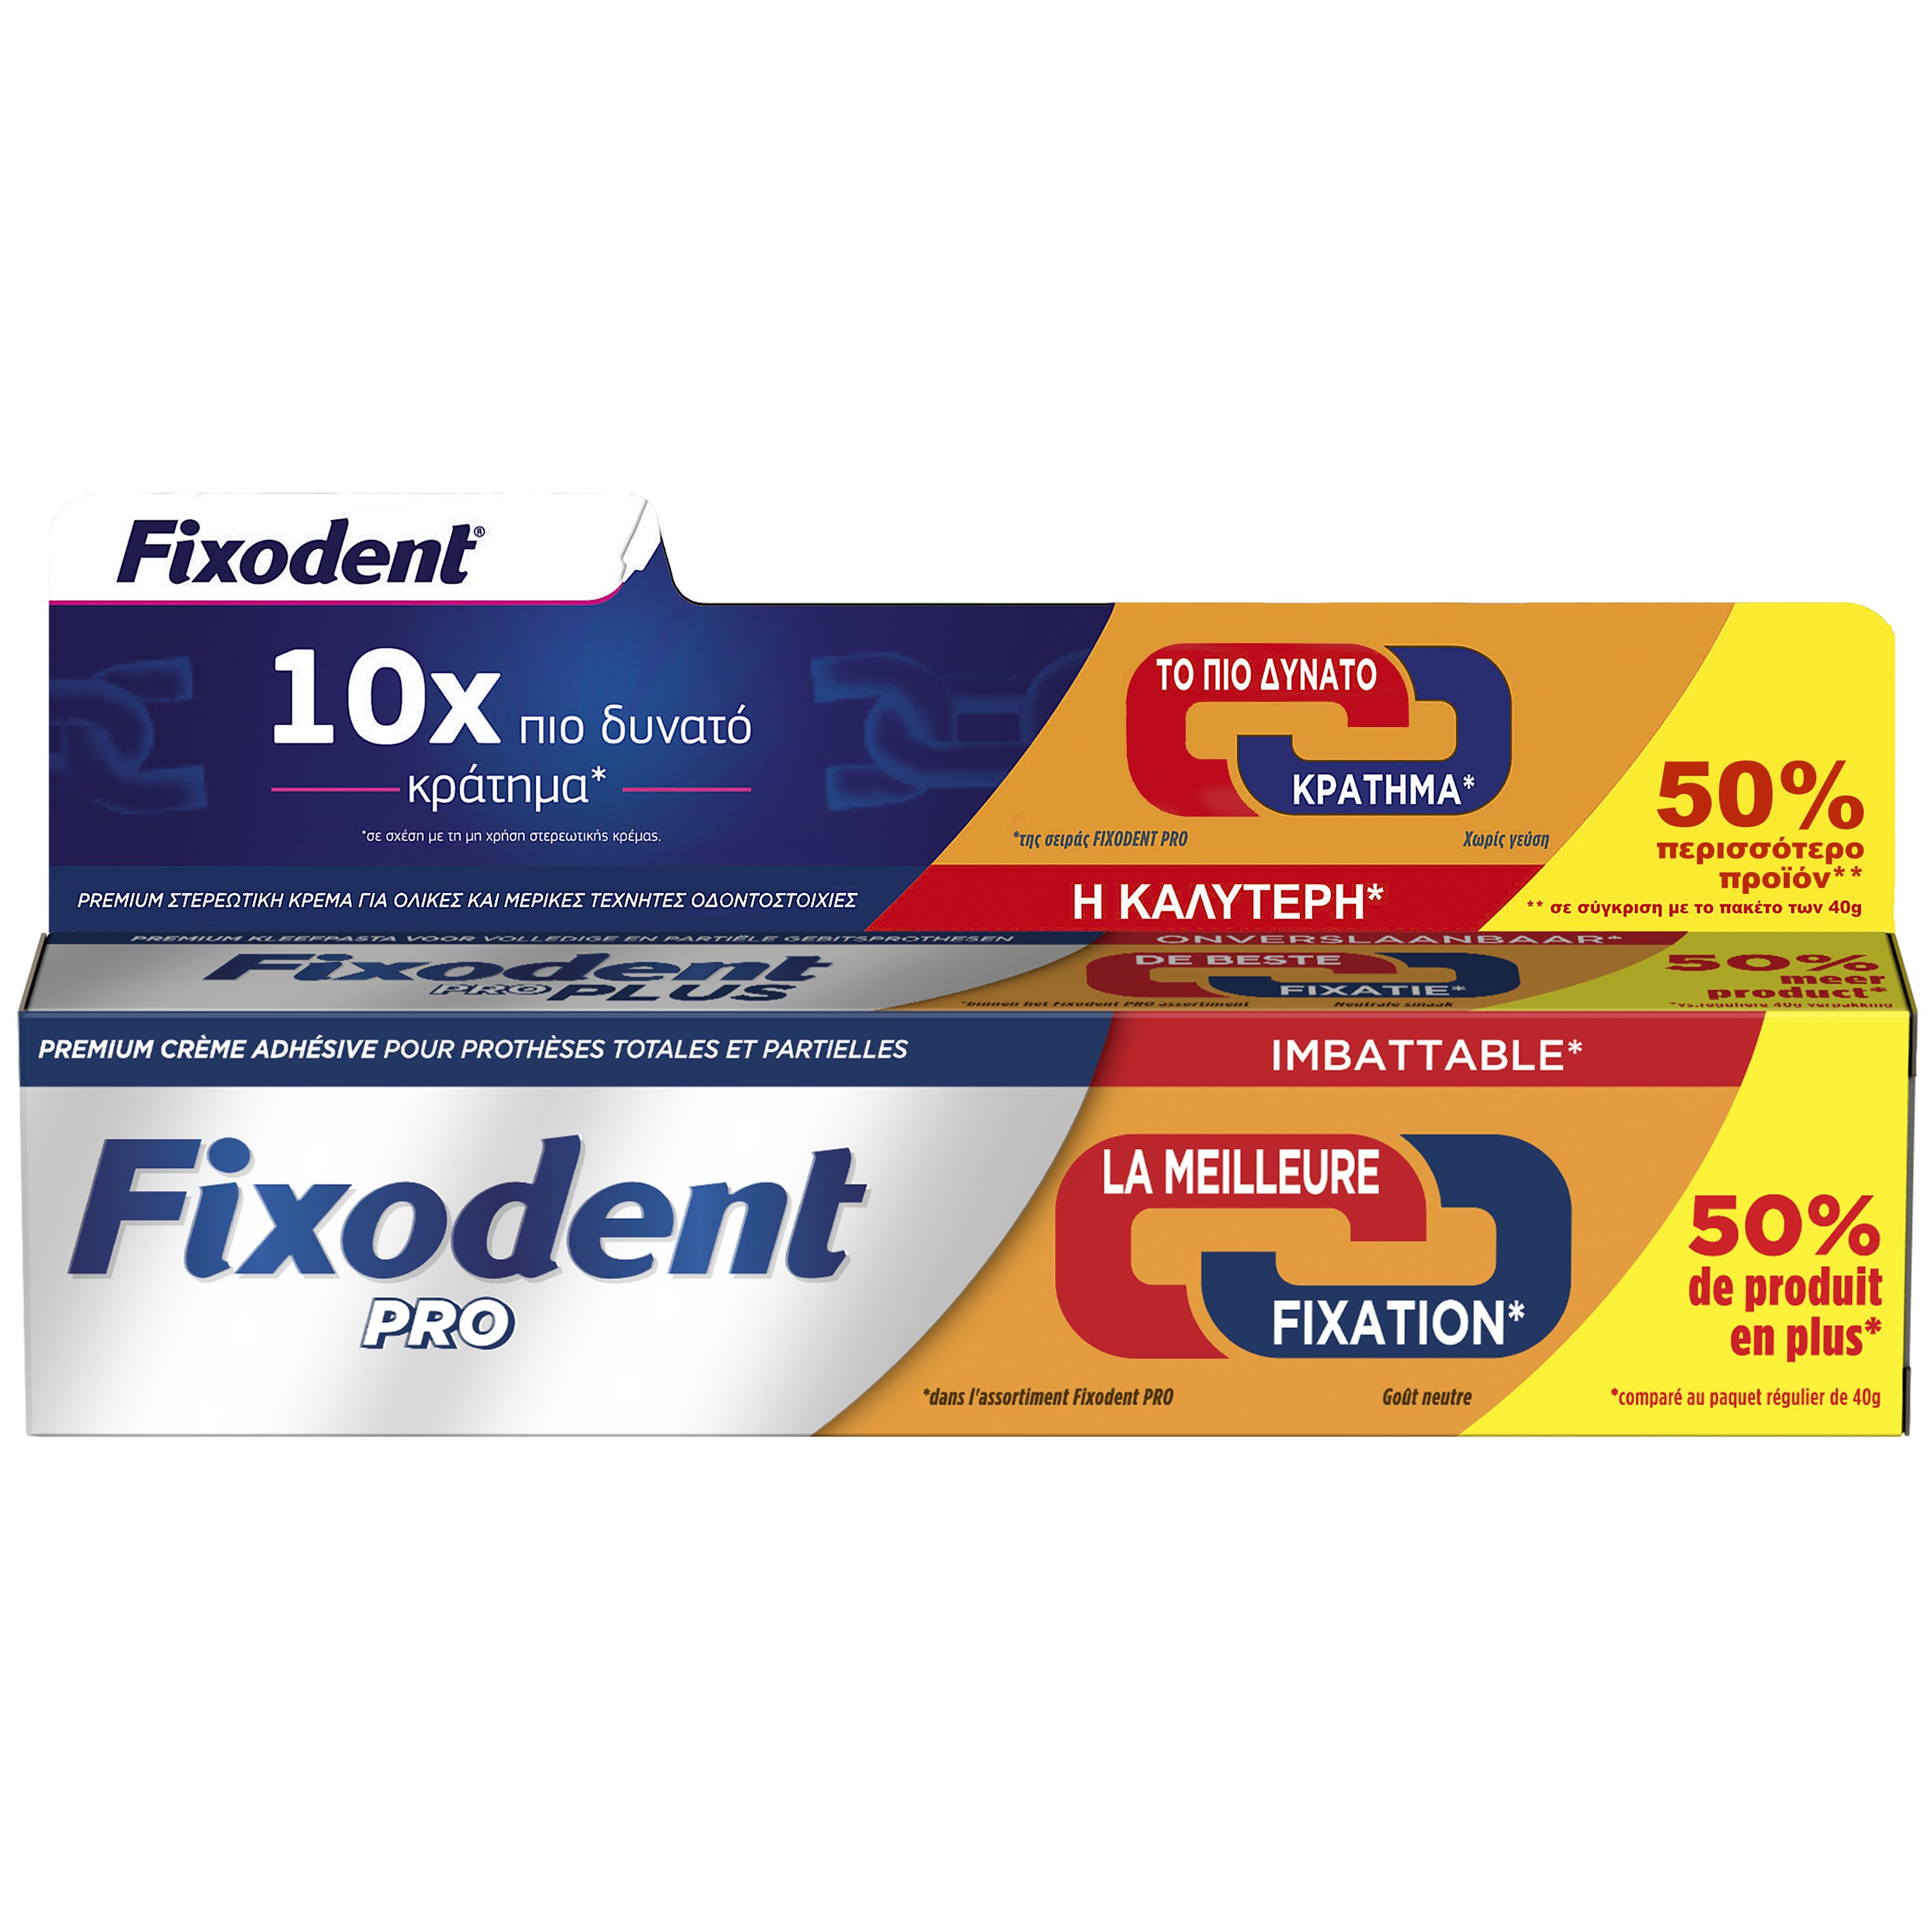 Fixodent Fixodent Promo Pro Plus Best Hold Premium Denture Στερεωτική Κρέμα με Ισχυρό Κράτημα για Ολικές & Μερικές Οδοντοστοιχίες 60g 50% Επιπλέον Προϊόν